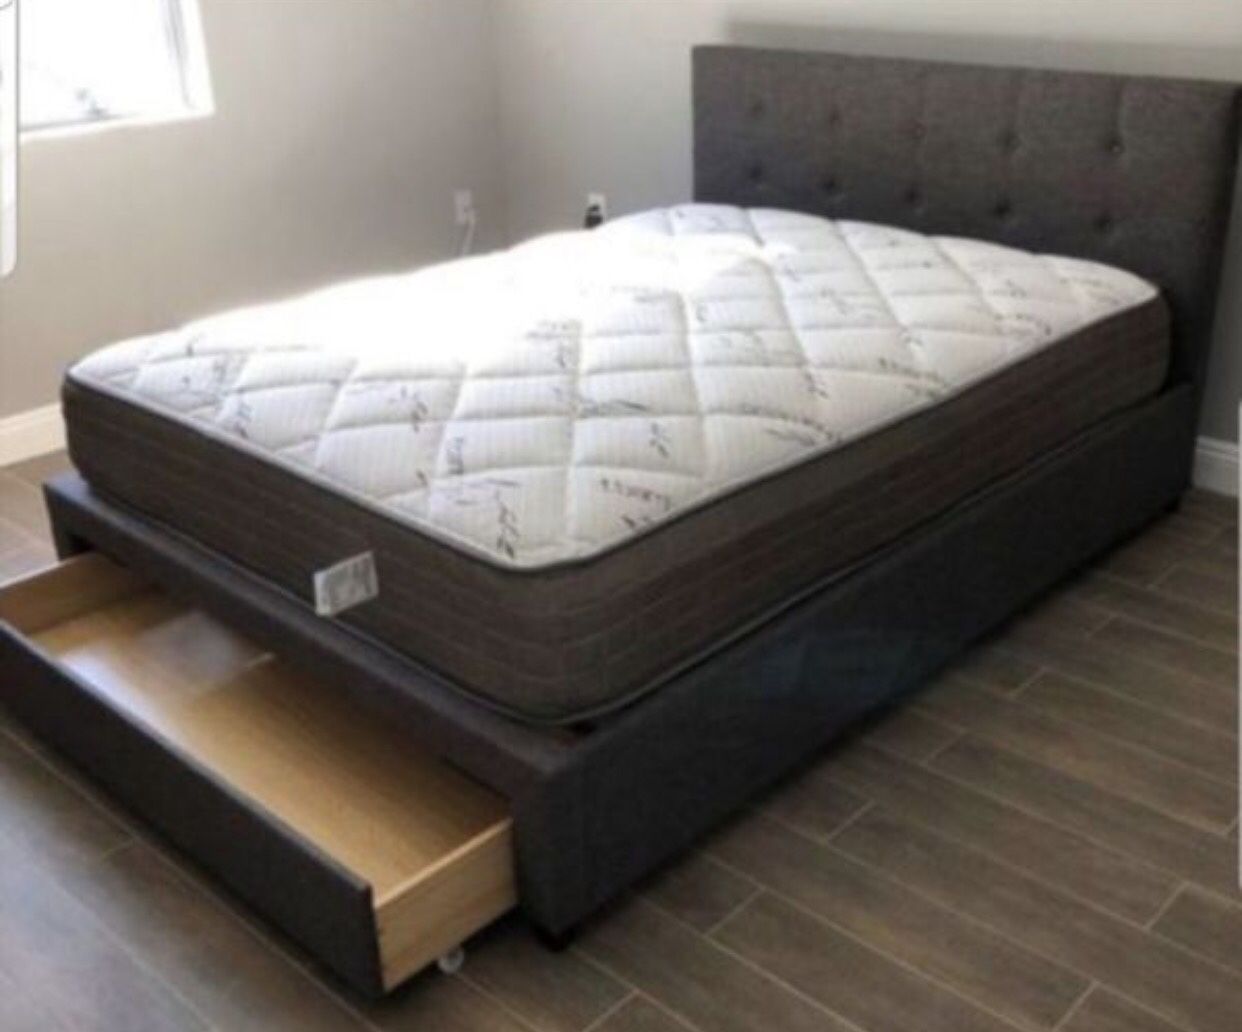 Queen Size Bedframe and mattress !! $325 free drop off